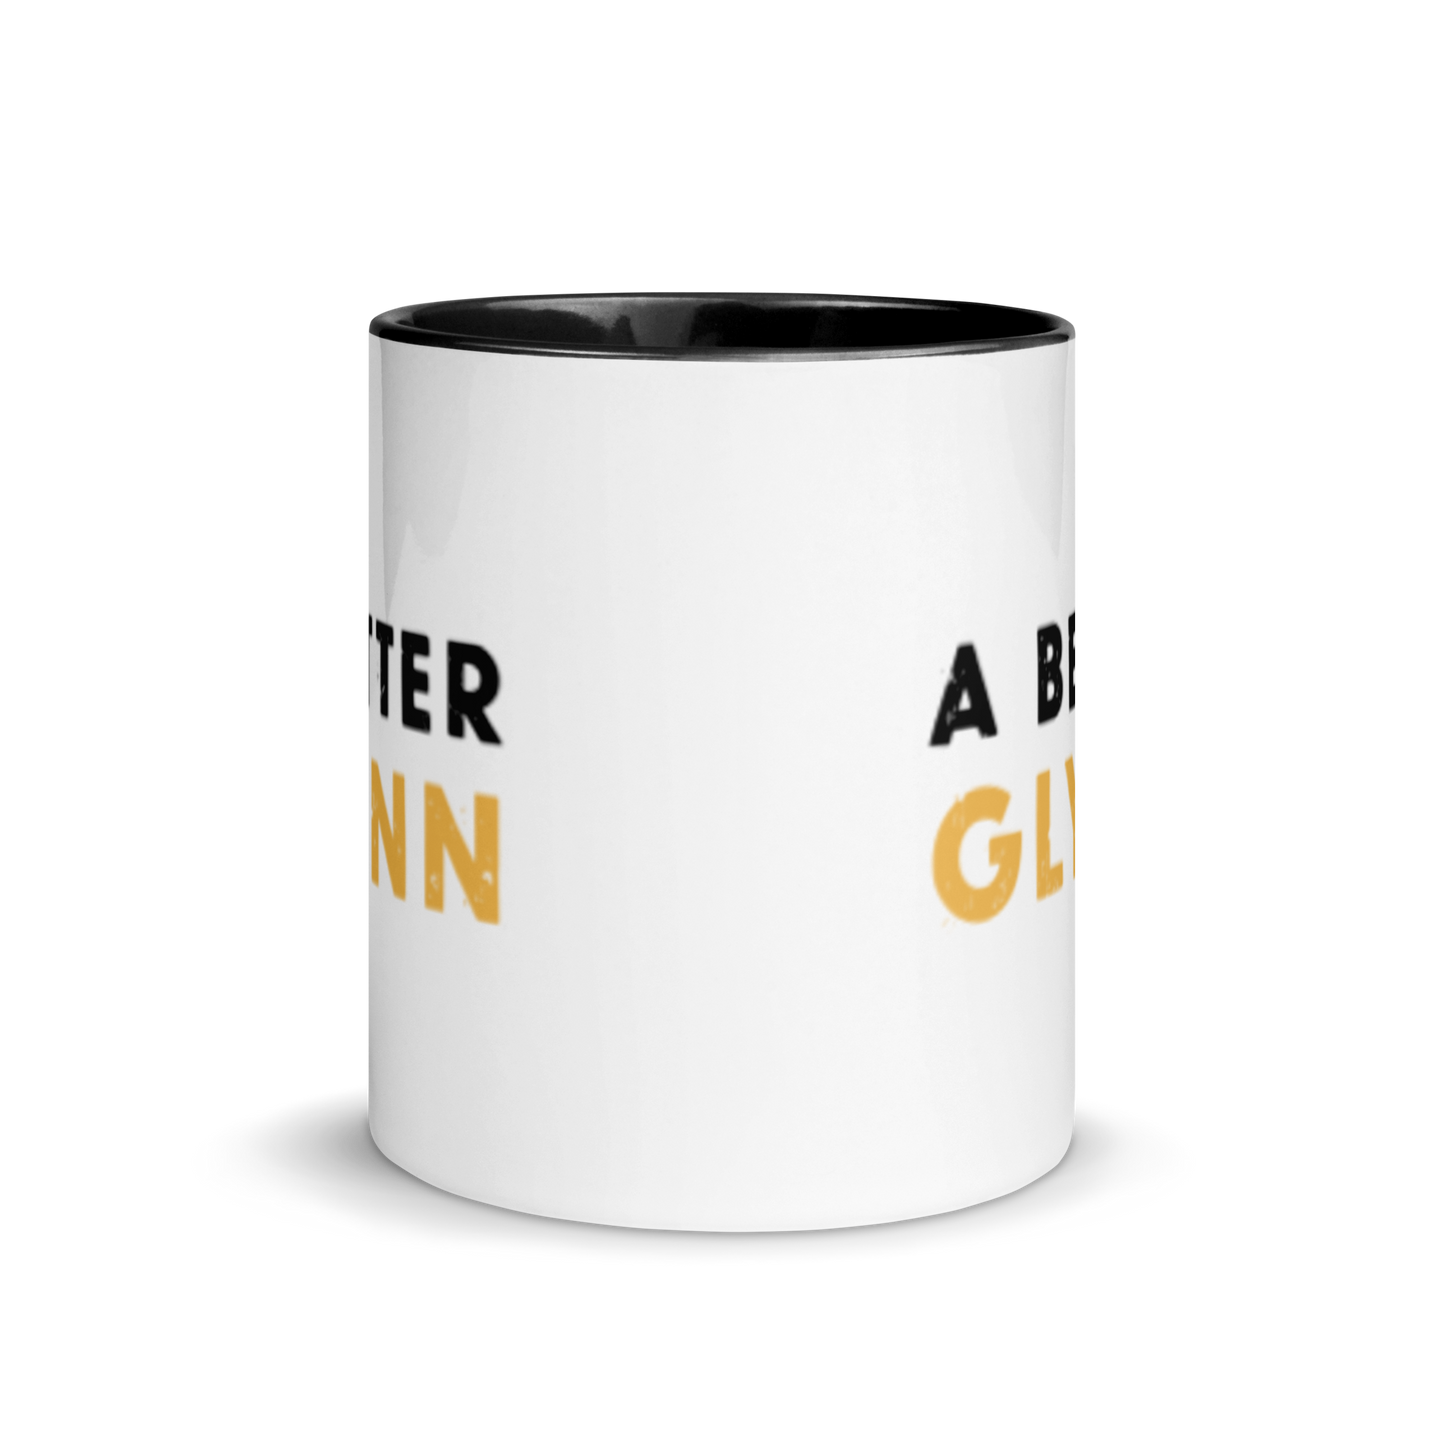 ABG Coffee Mug